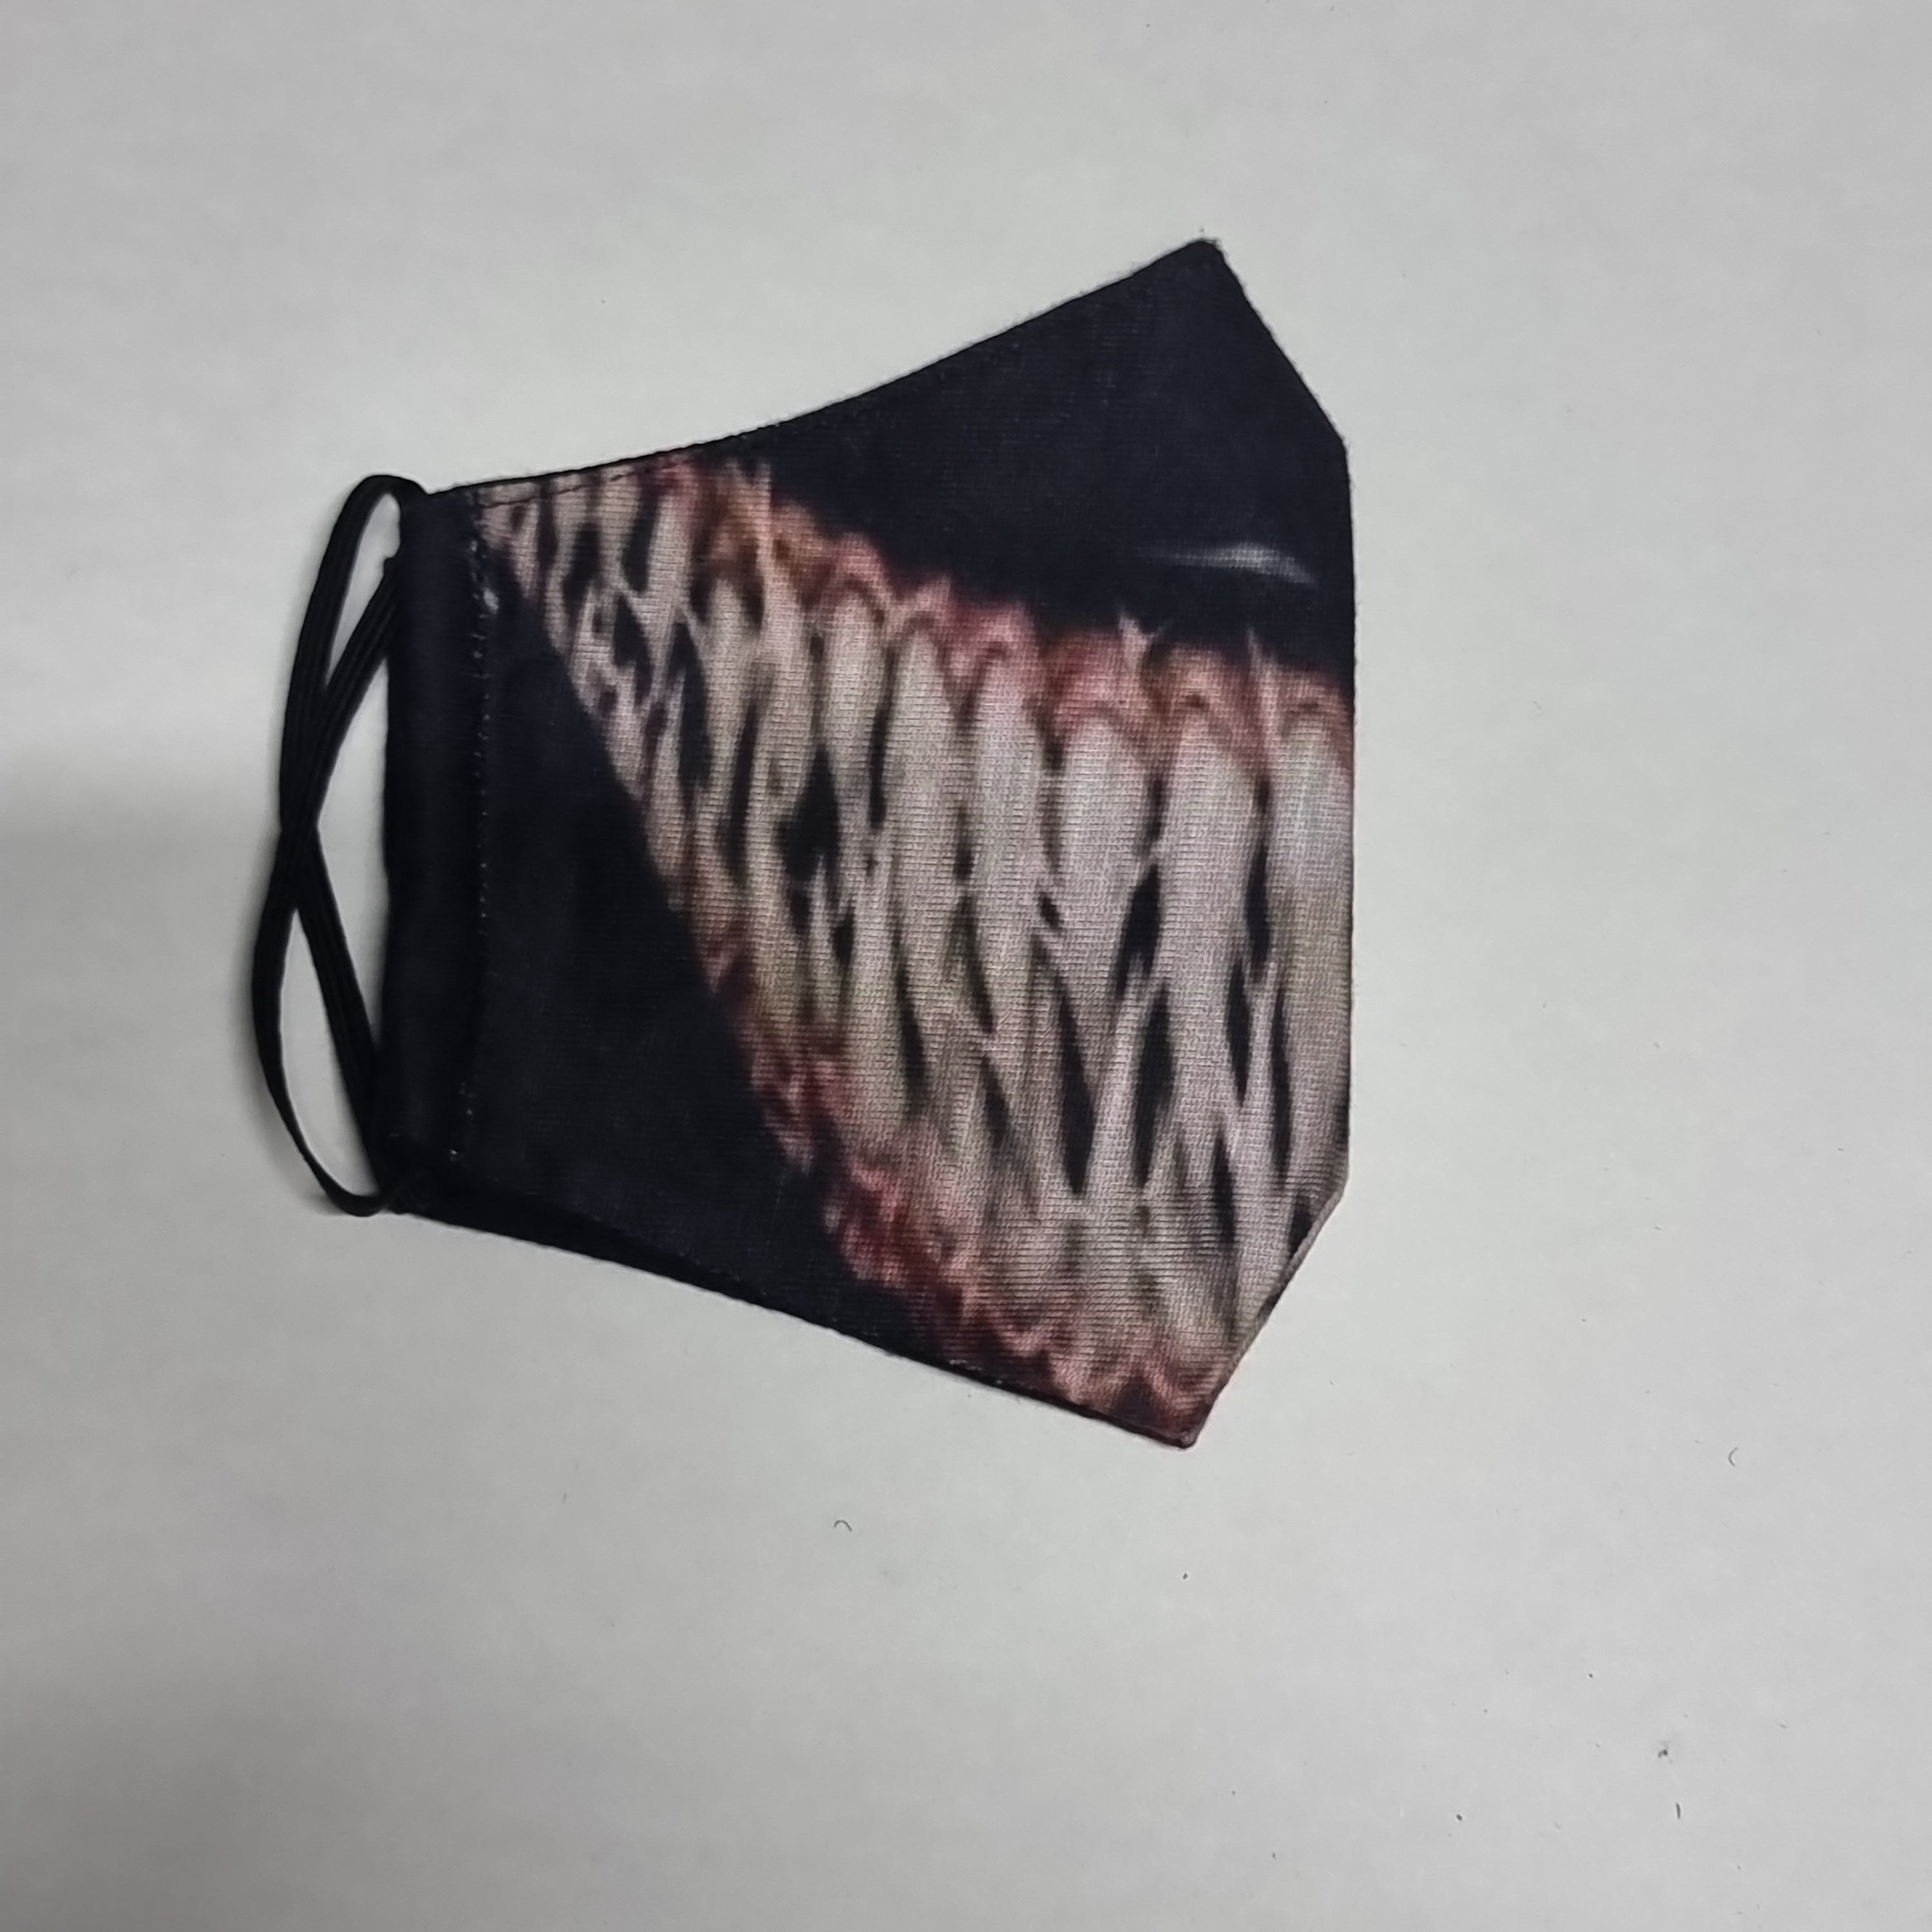 Venom teeth mask